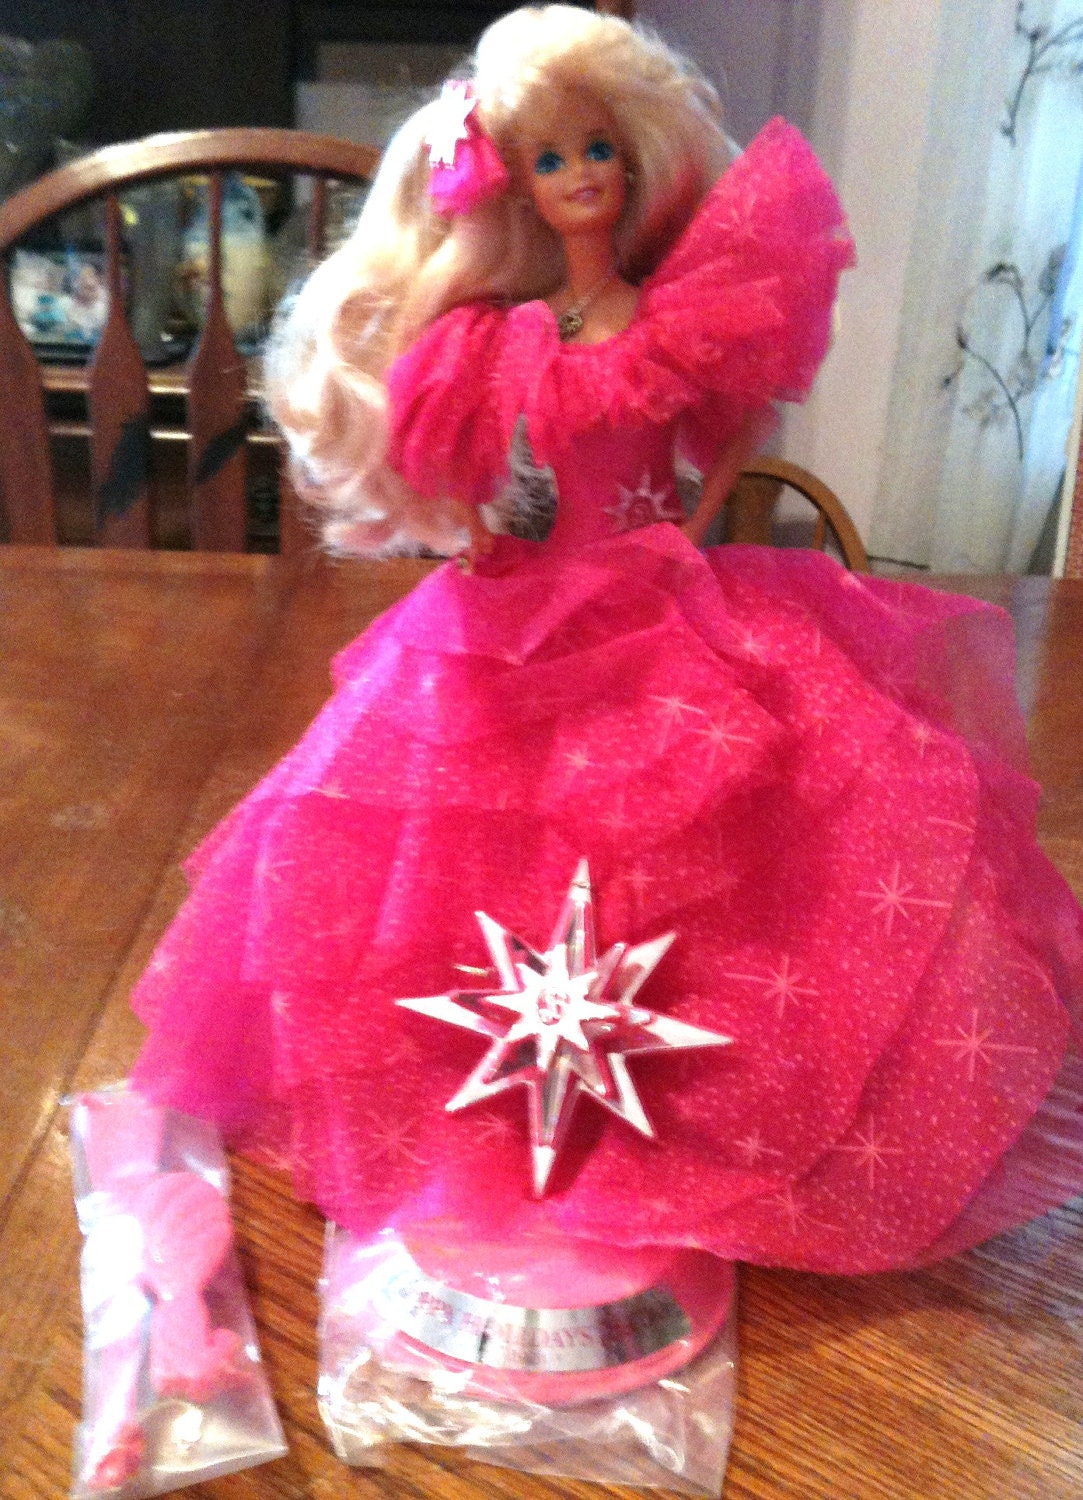 holiday barbie 1990